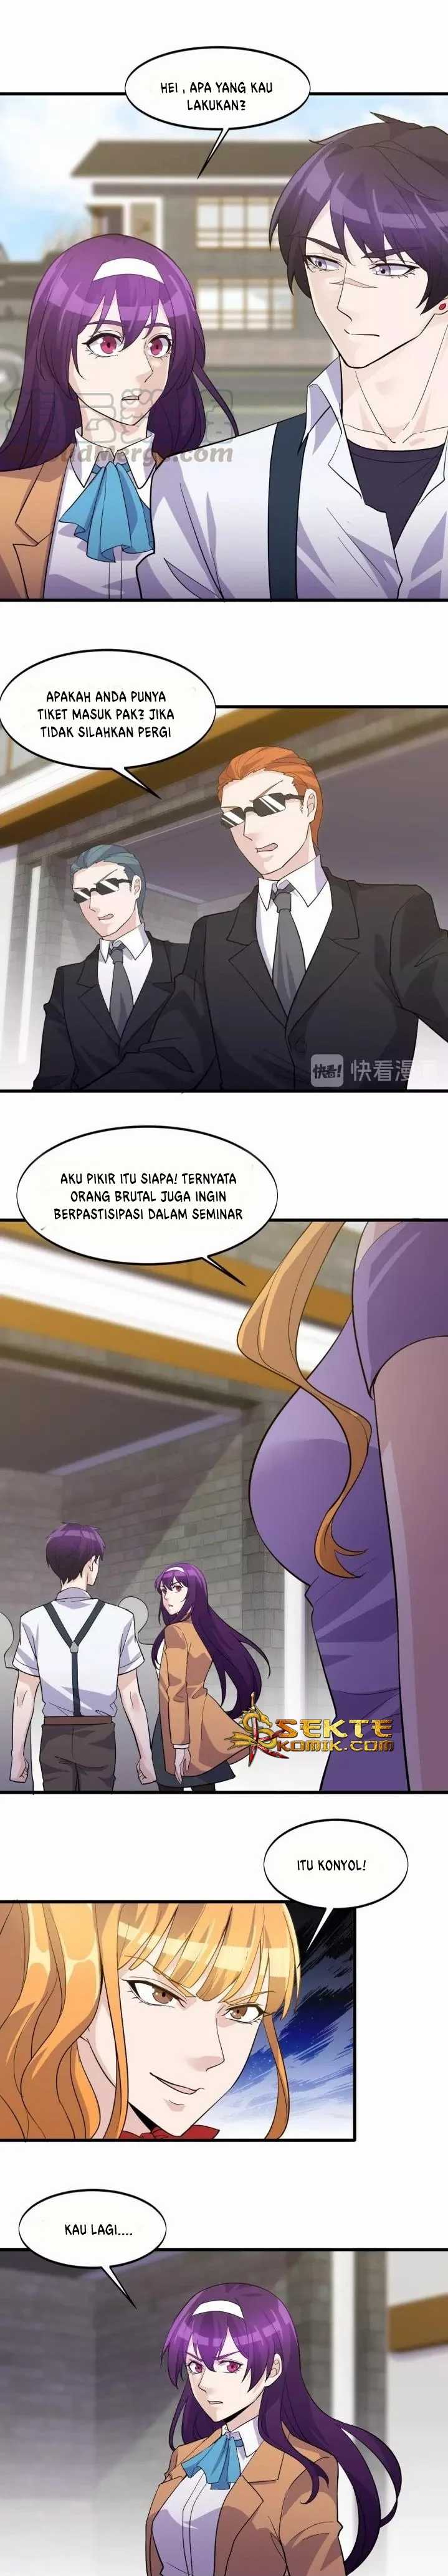 Super Bodyguard Chapter 33 bahasa indonesia